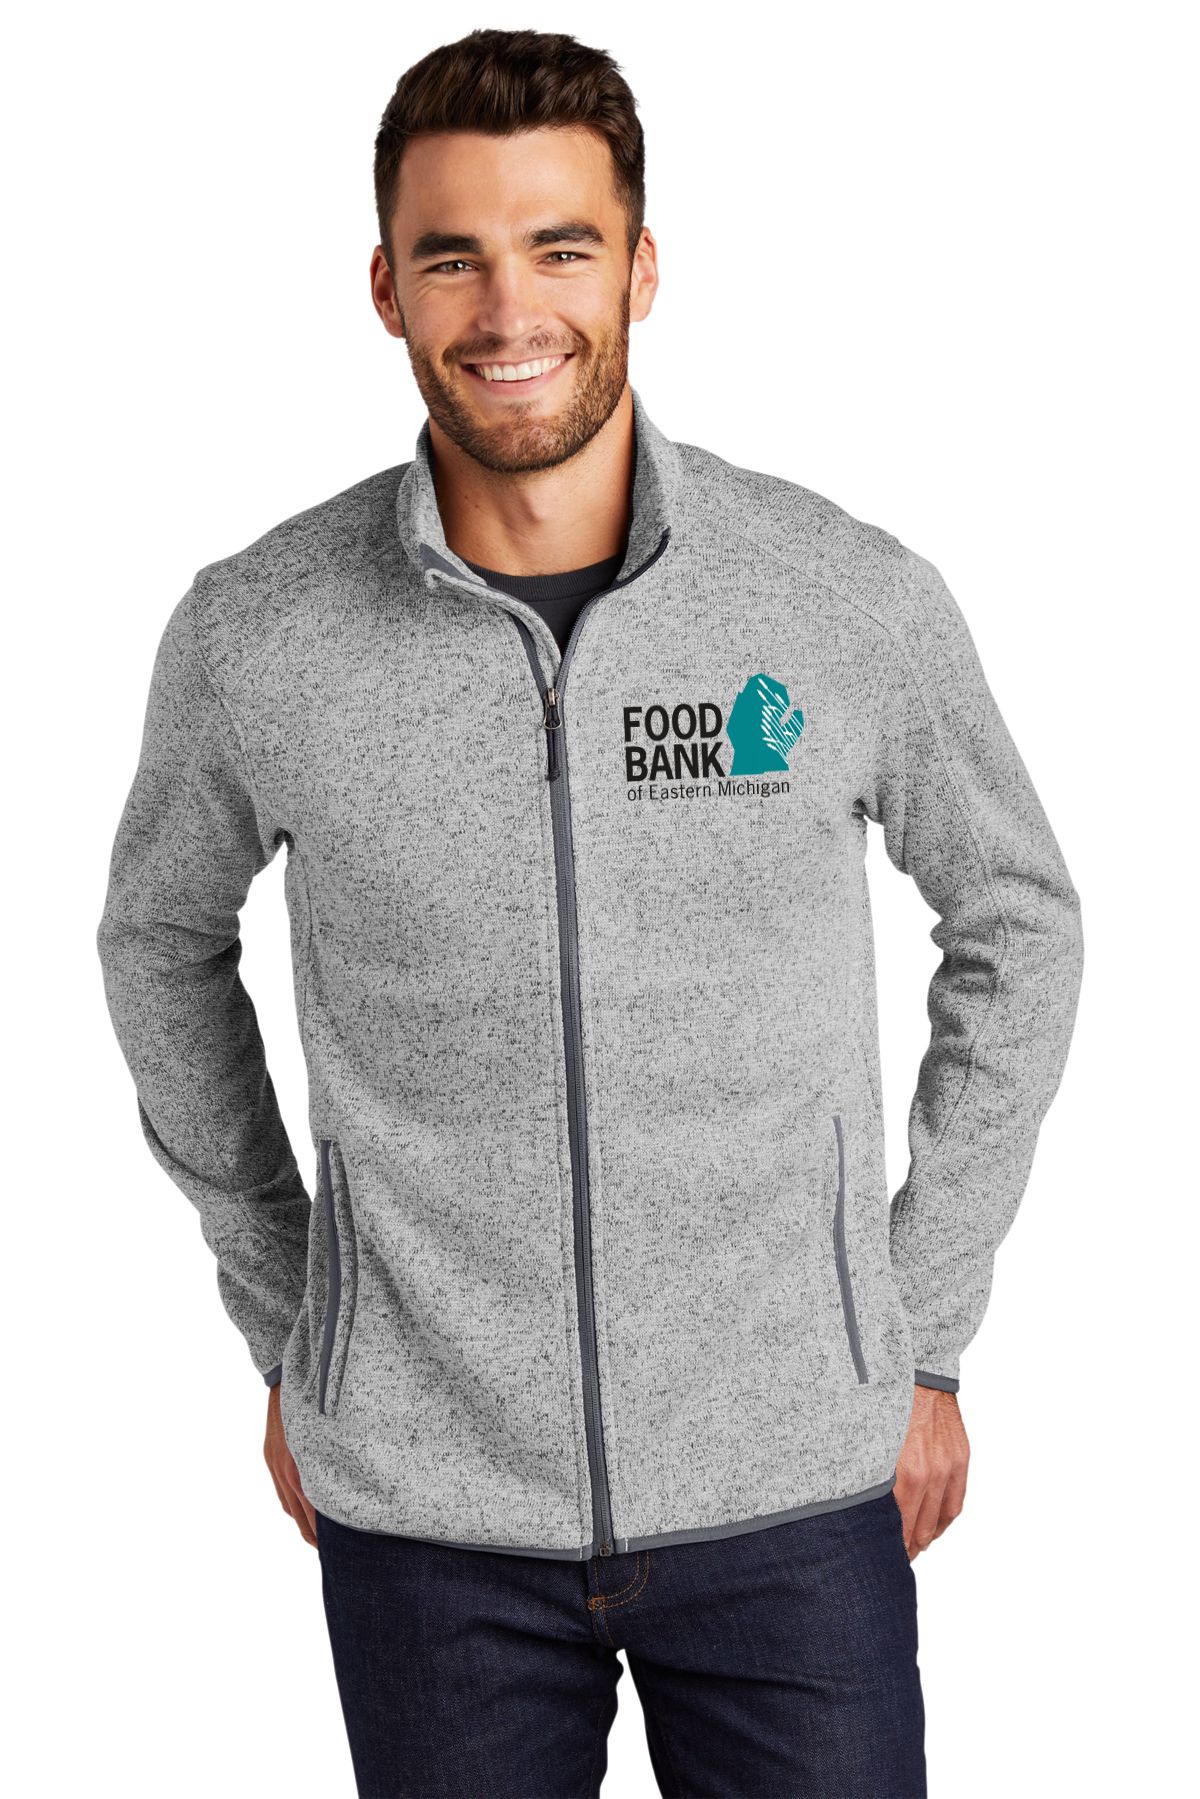 Food Bank of Eastern Michigan Sweater Fleece